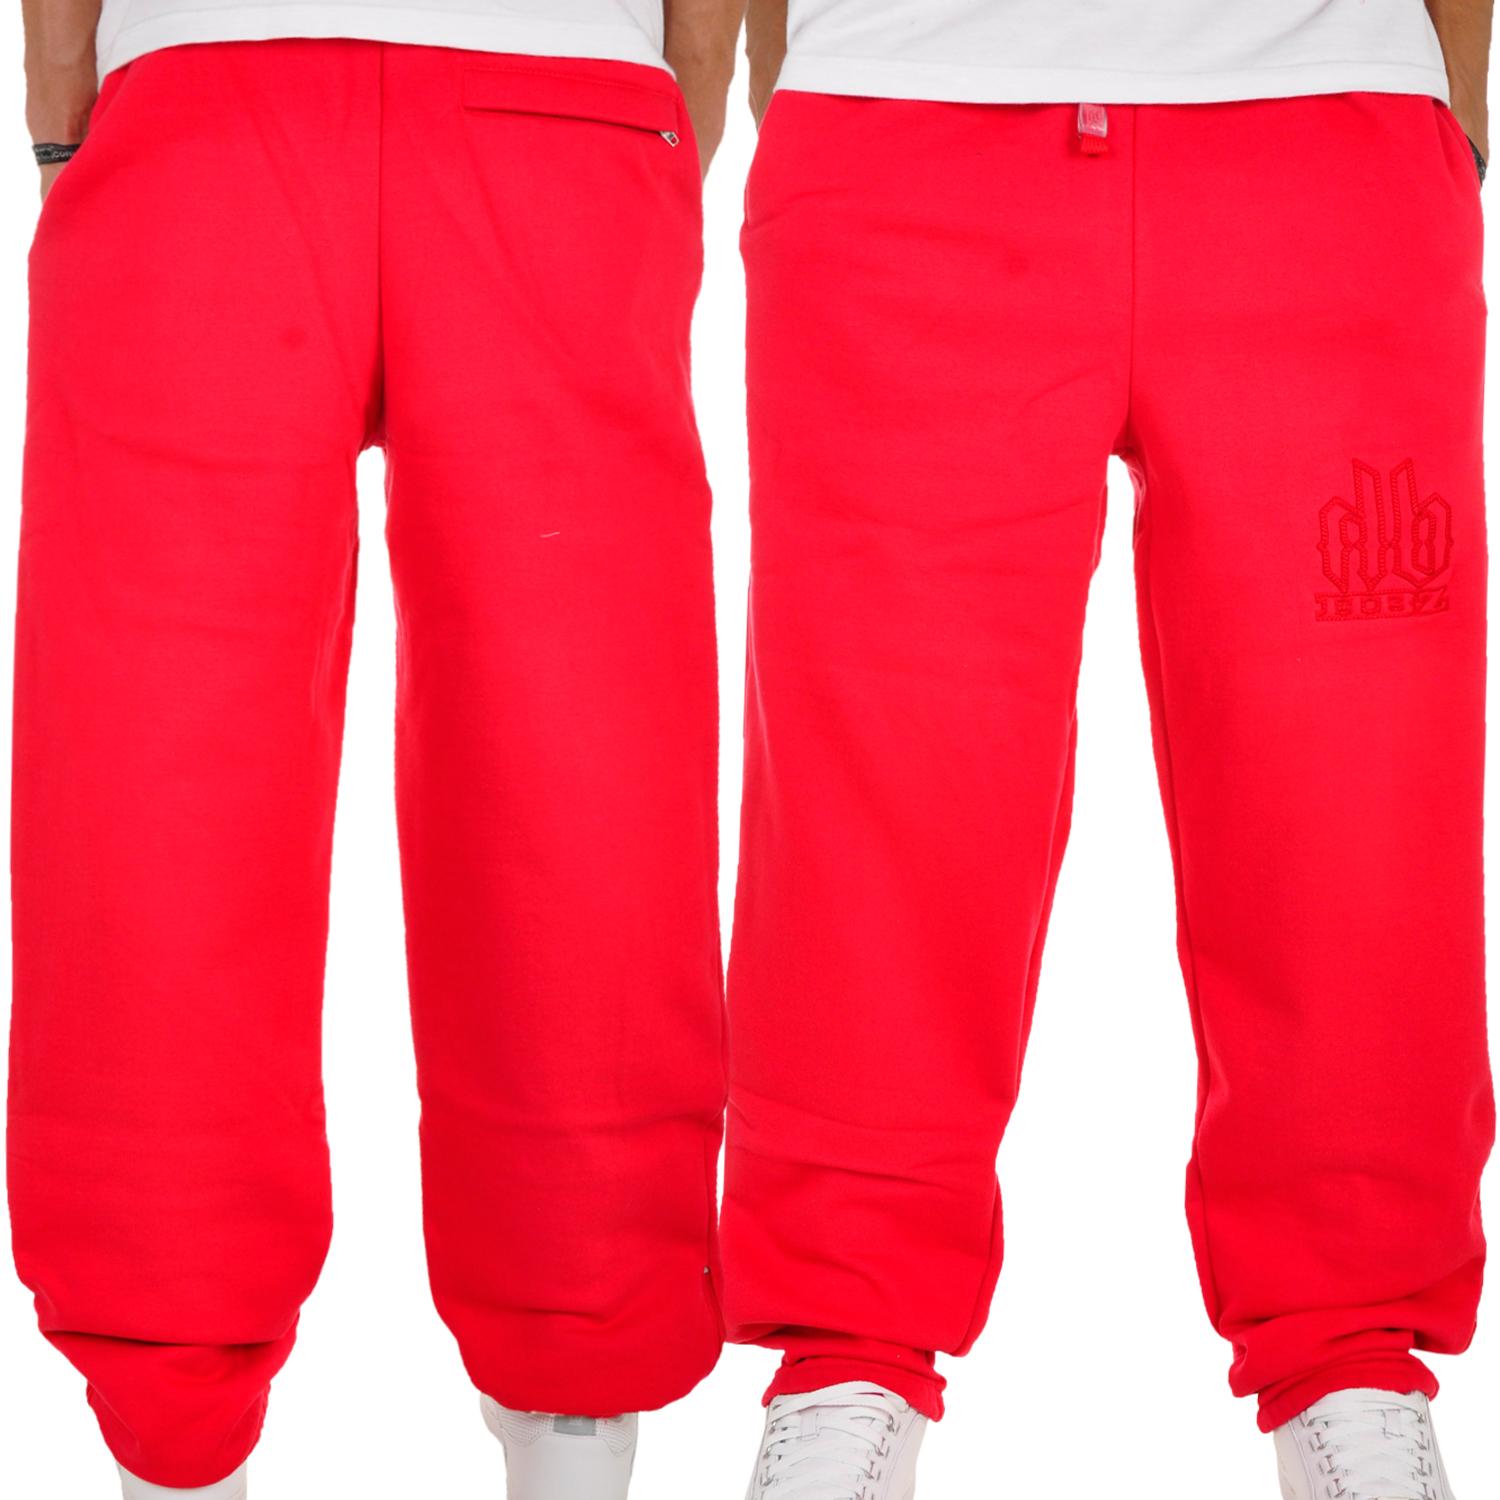 Foto Hoodboyz Premium Hbz Logo Pantalones De Entrenamiento Rojo foto 126930